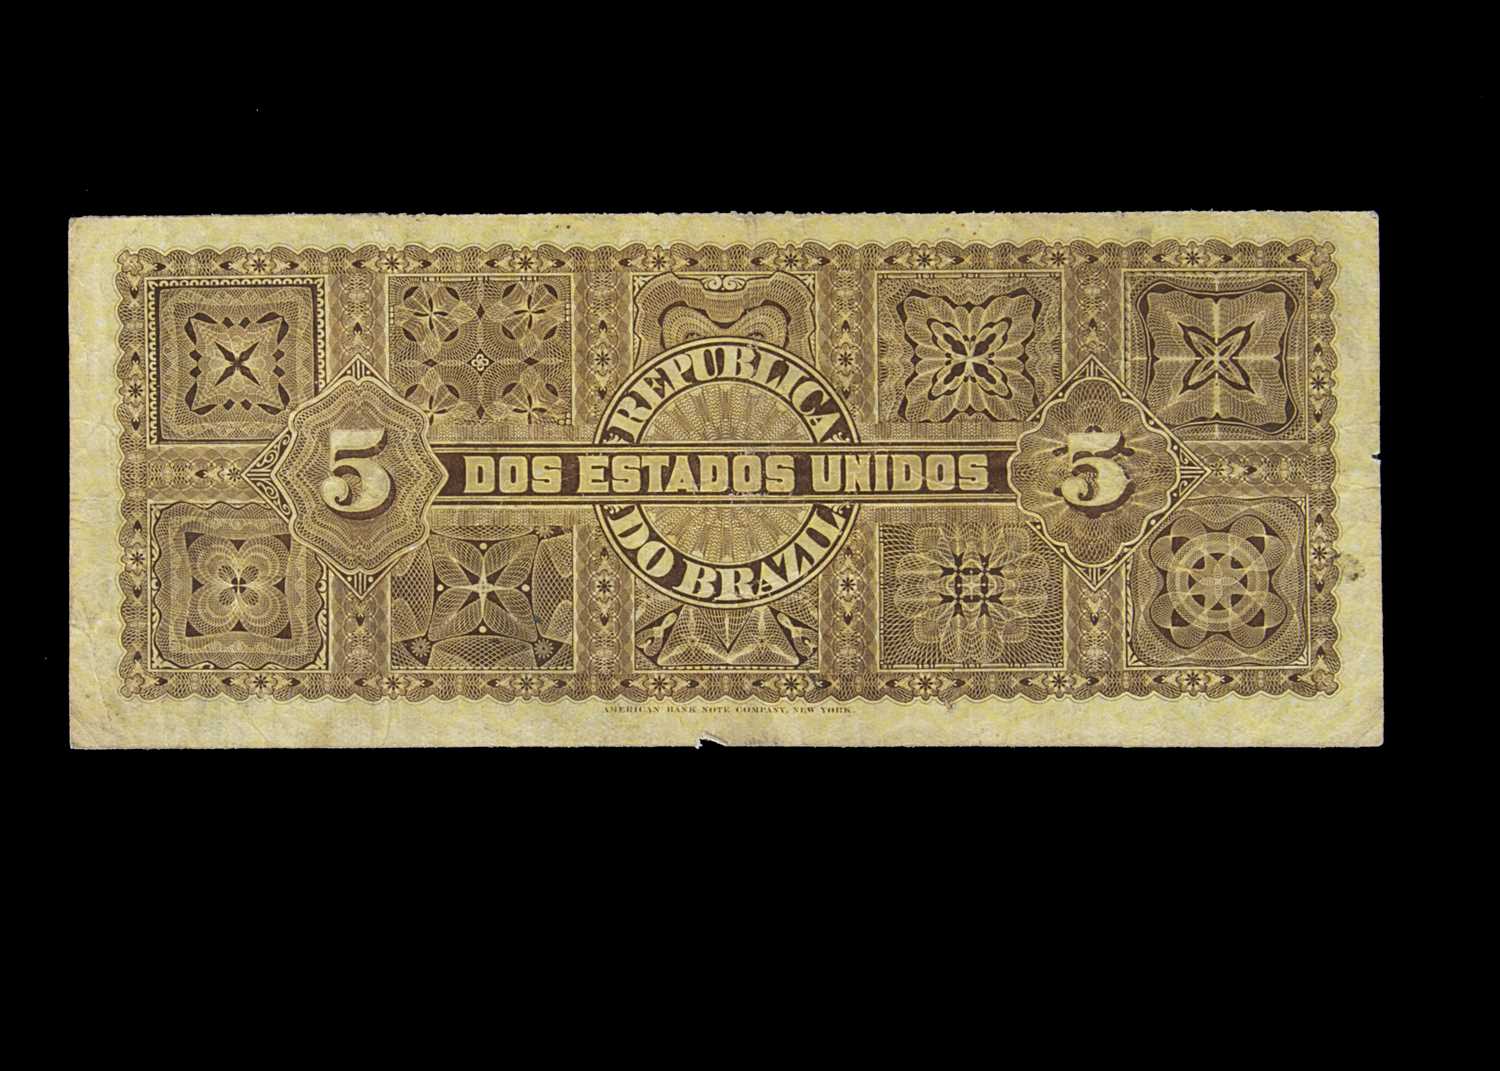 Brazil 5 Mil Reis banknote, - Image 2 of 2